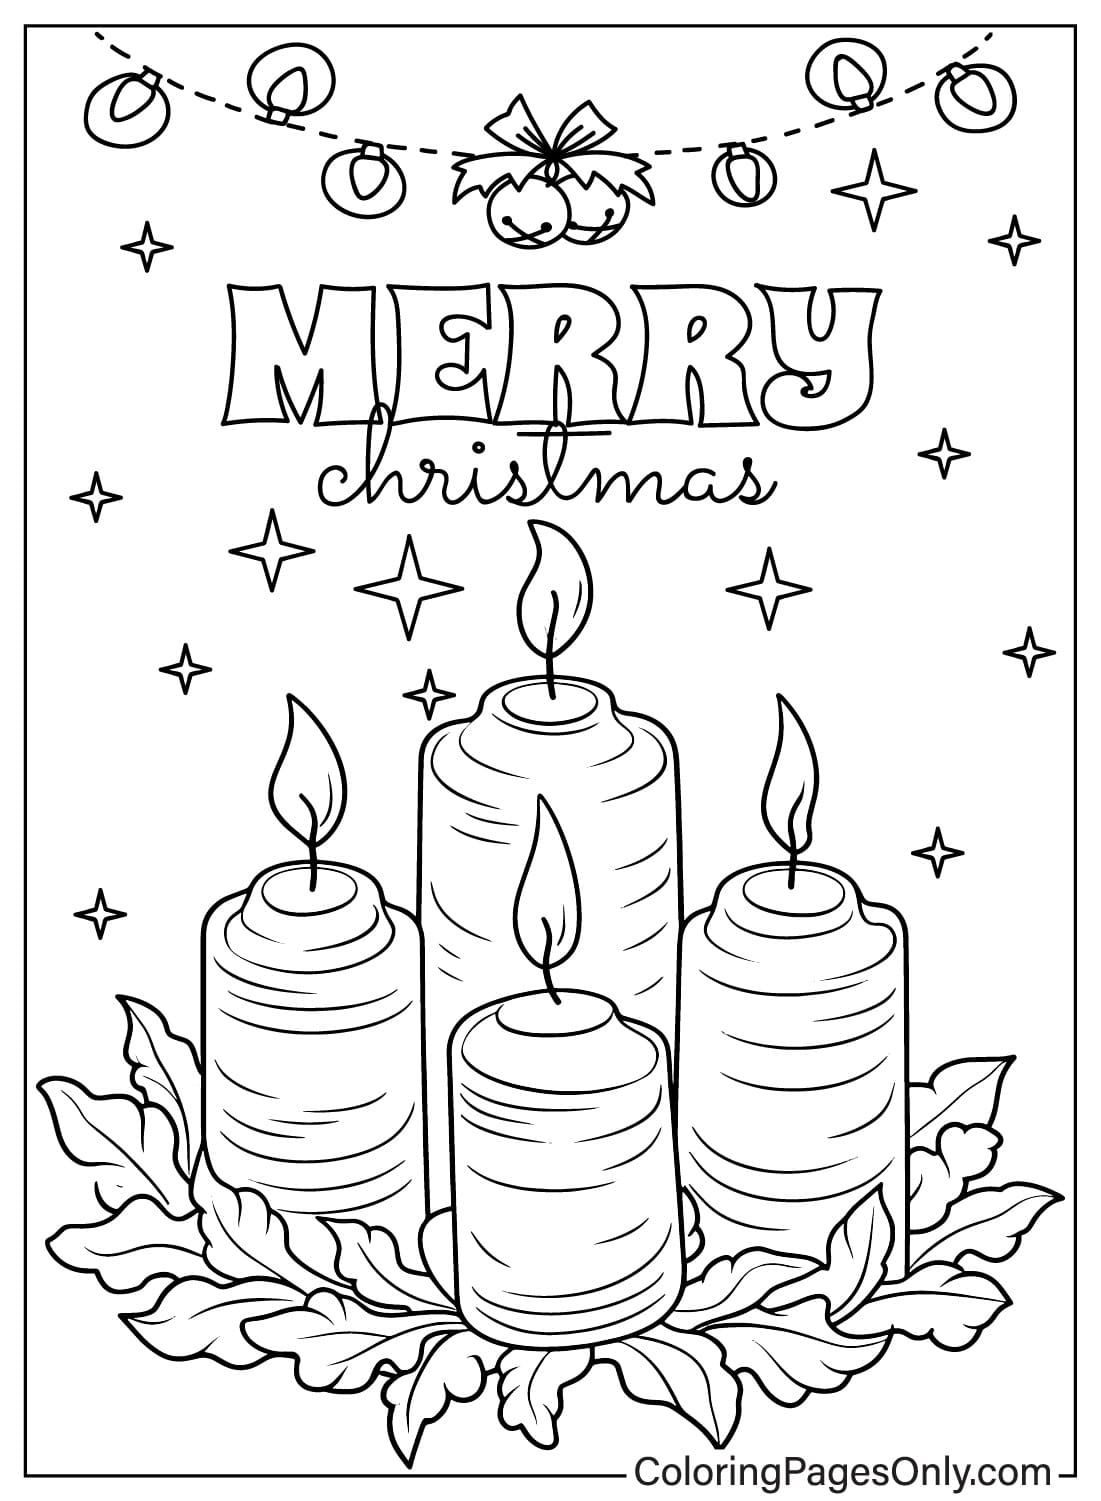 Página colorida de velas de Natal sem velas de Natal